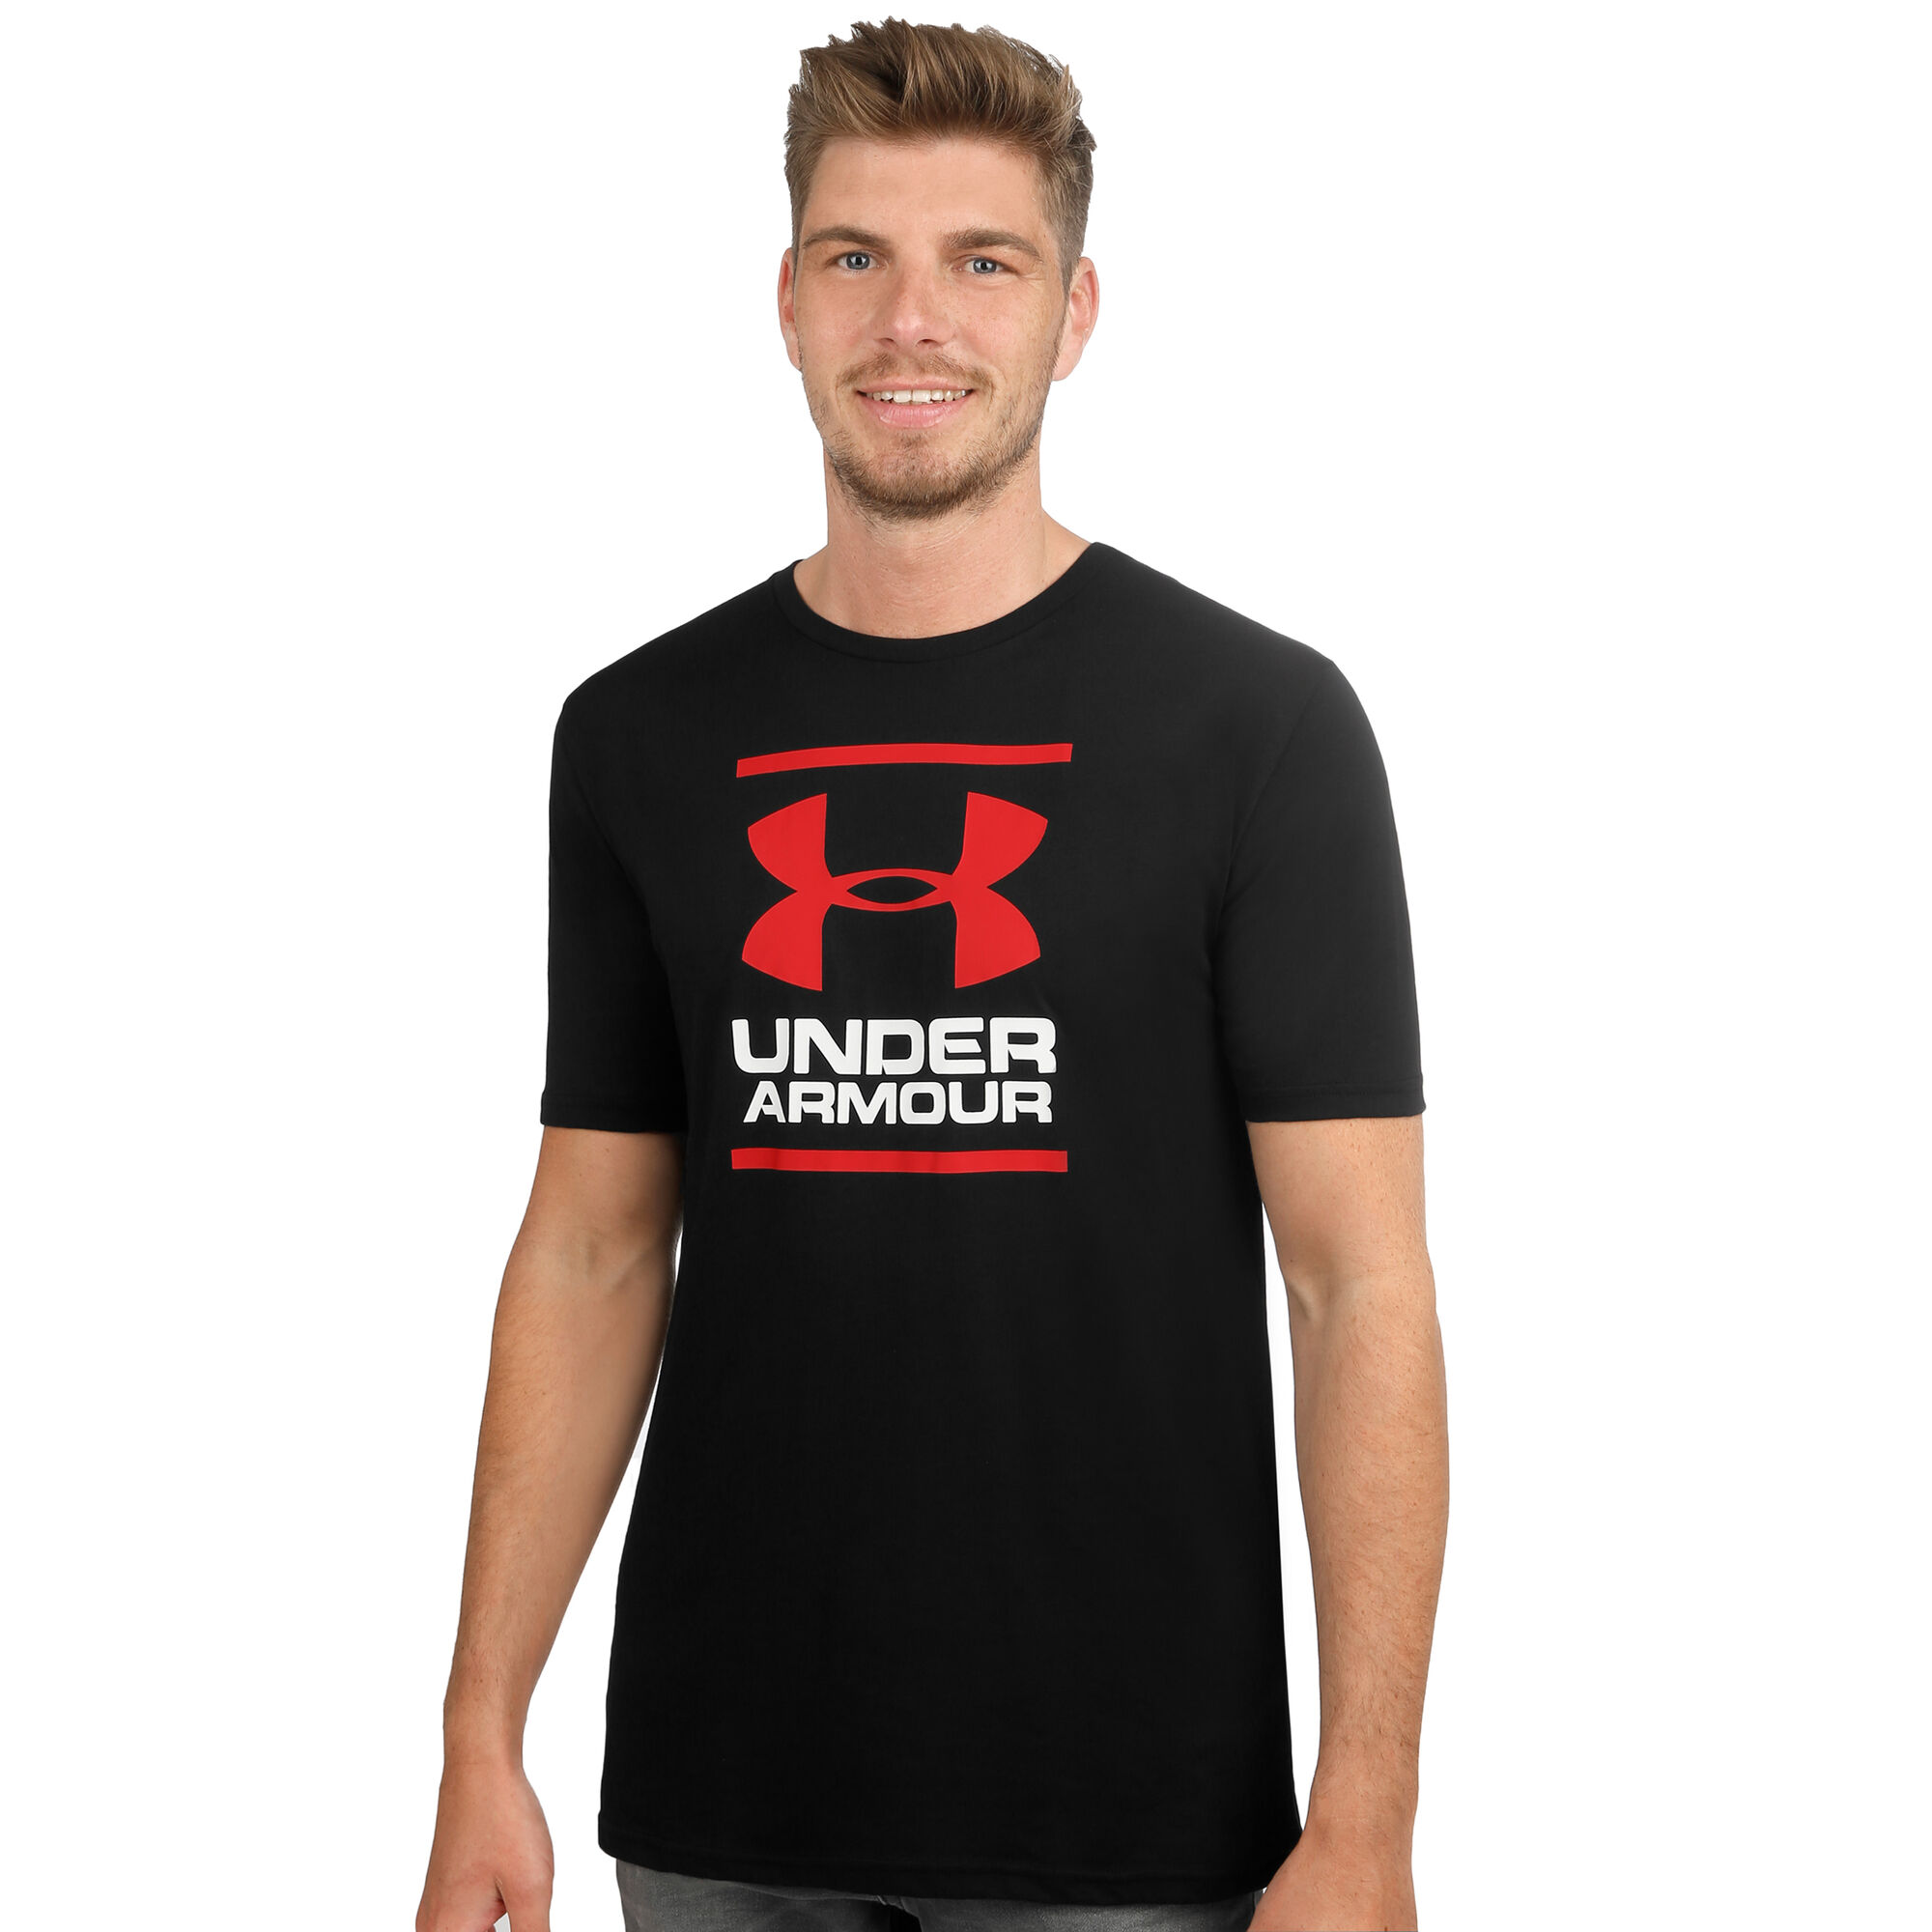 Buy Under Armour GL Foundation T-Shirt Men Black, Red online | Tennis Point  COM